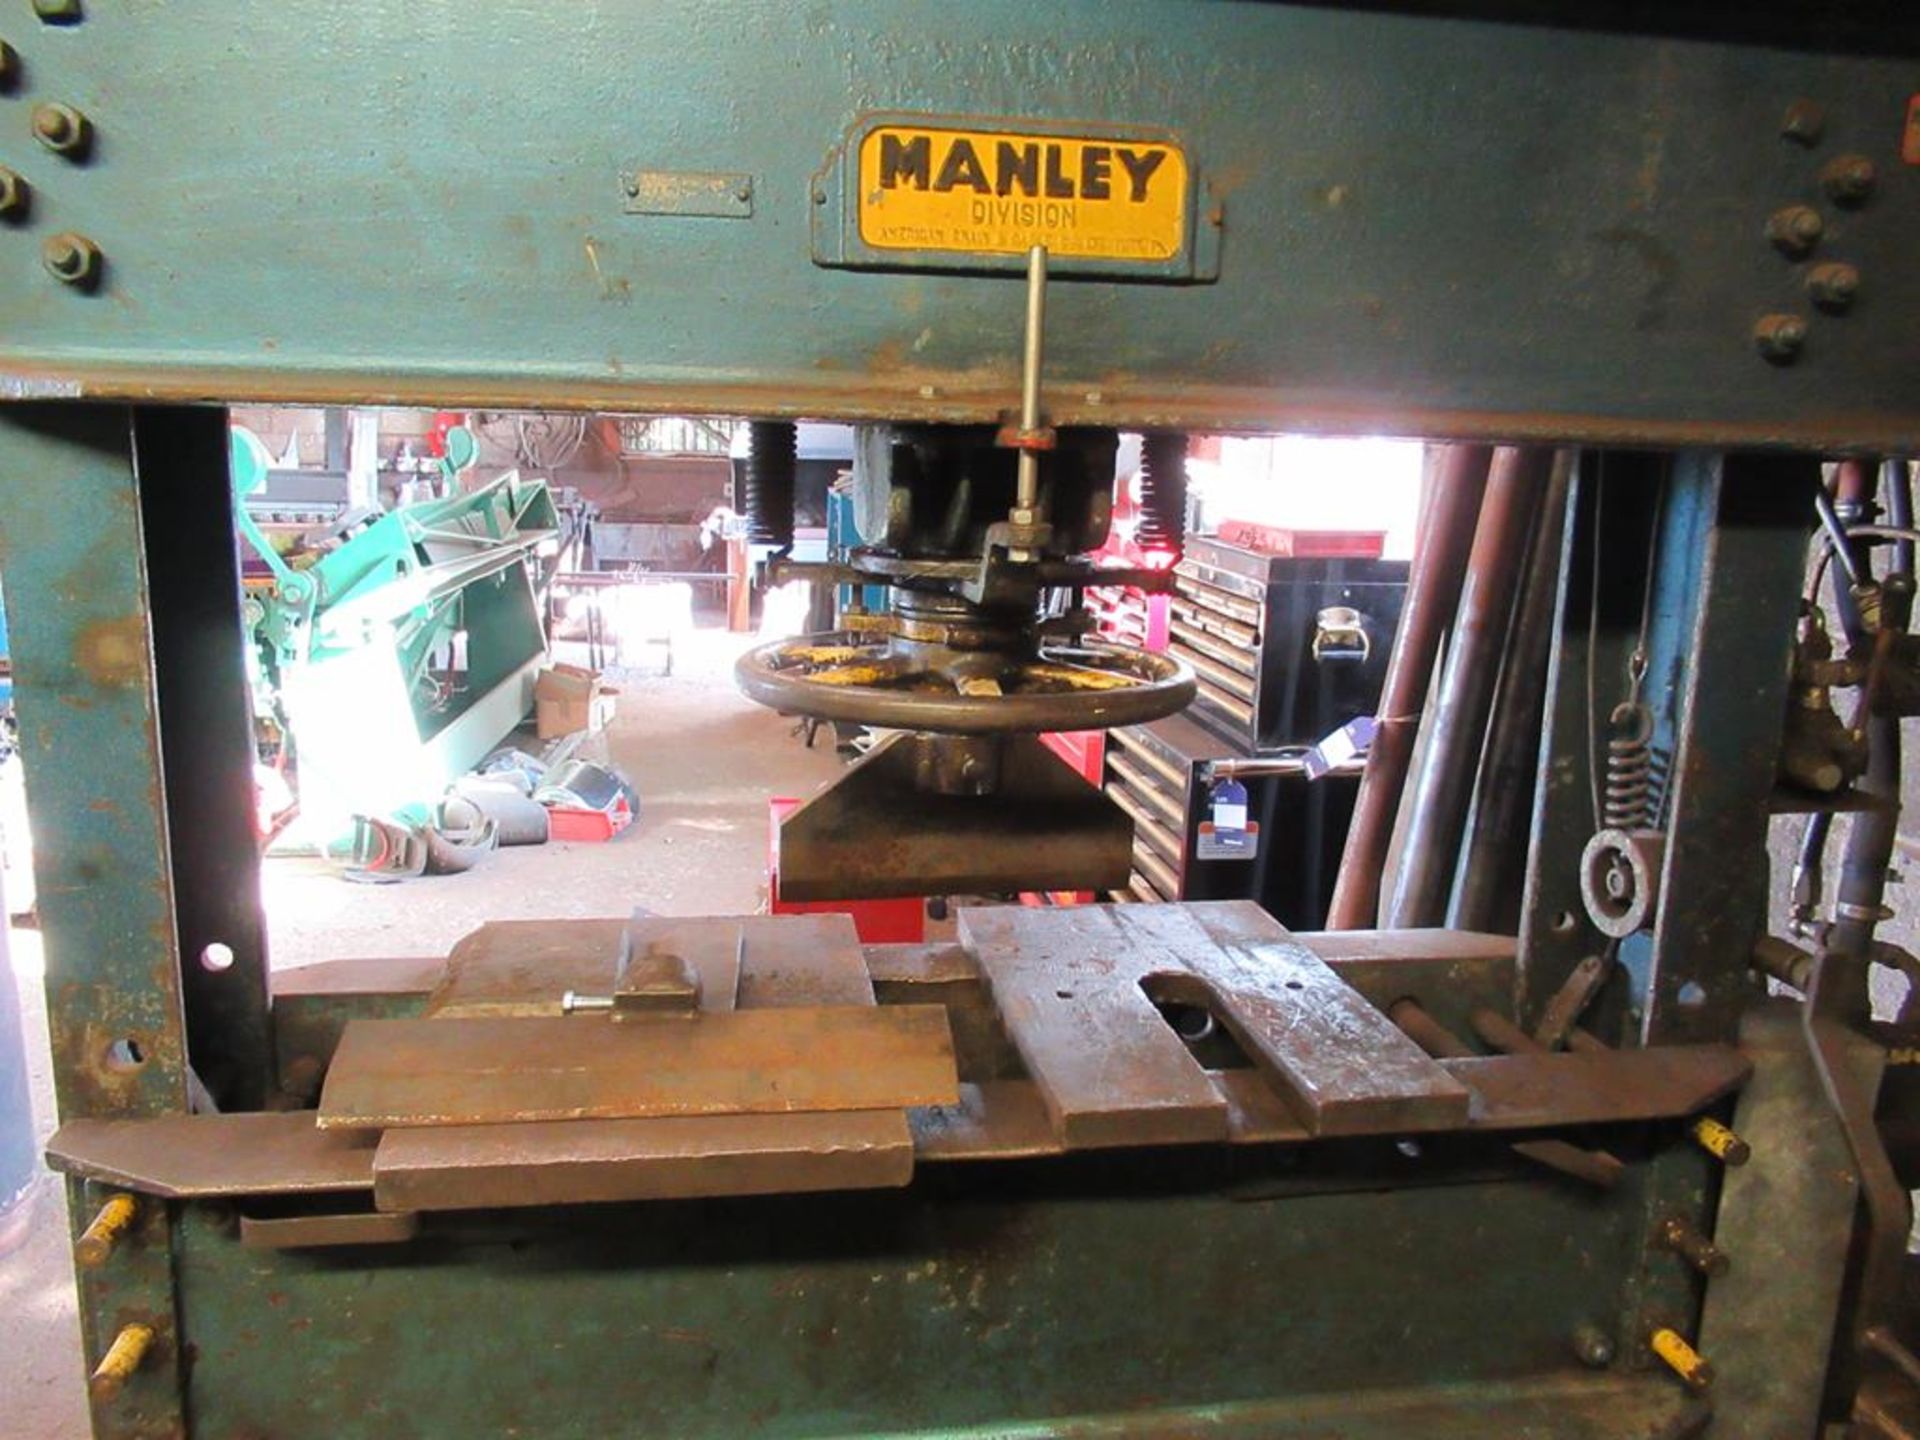 Manley heavy duty hydraulic vertical workshop press - Image 4 of 5